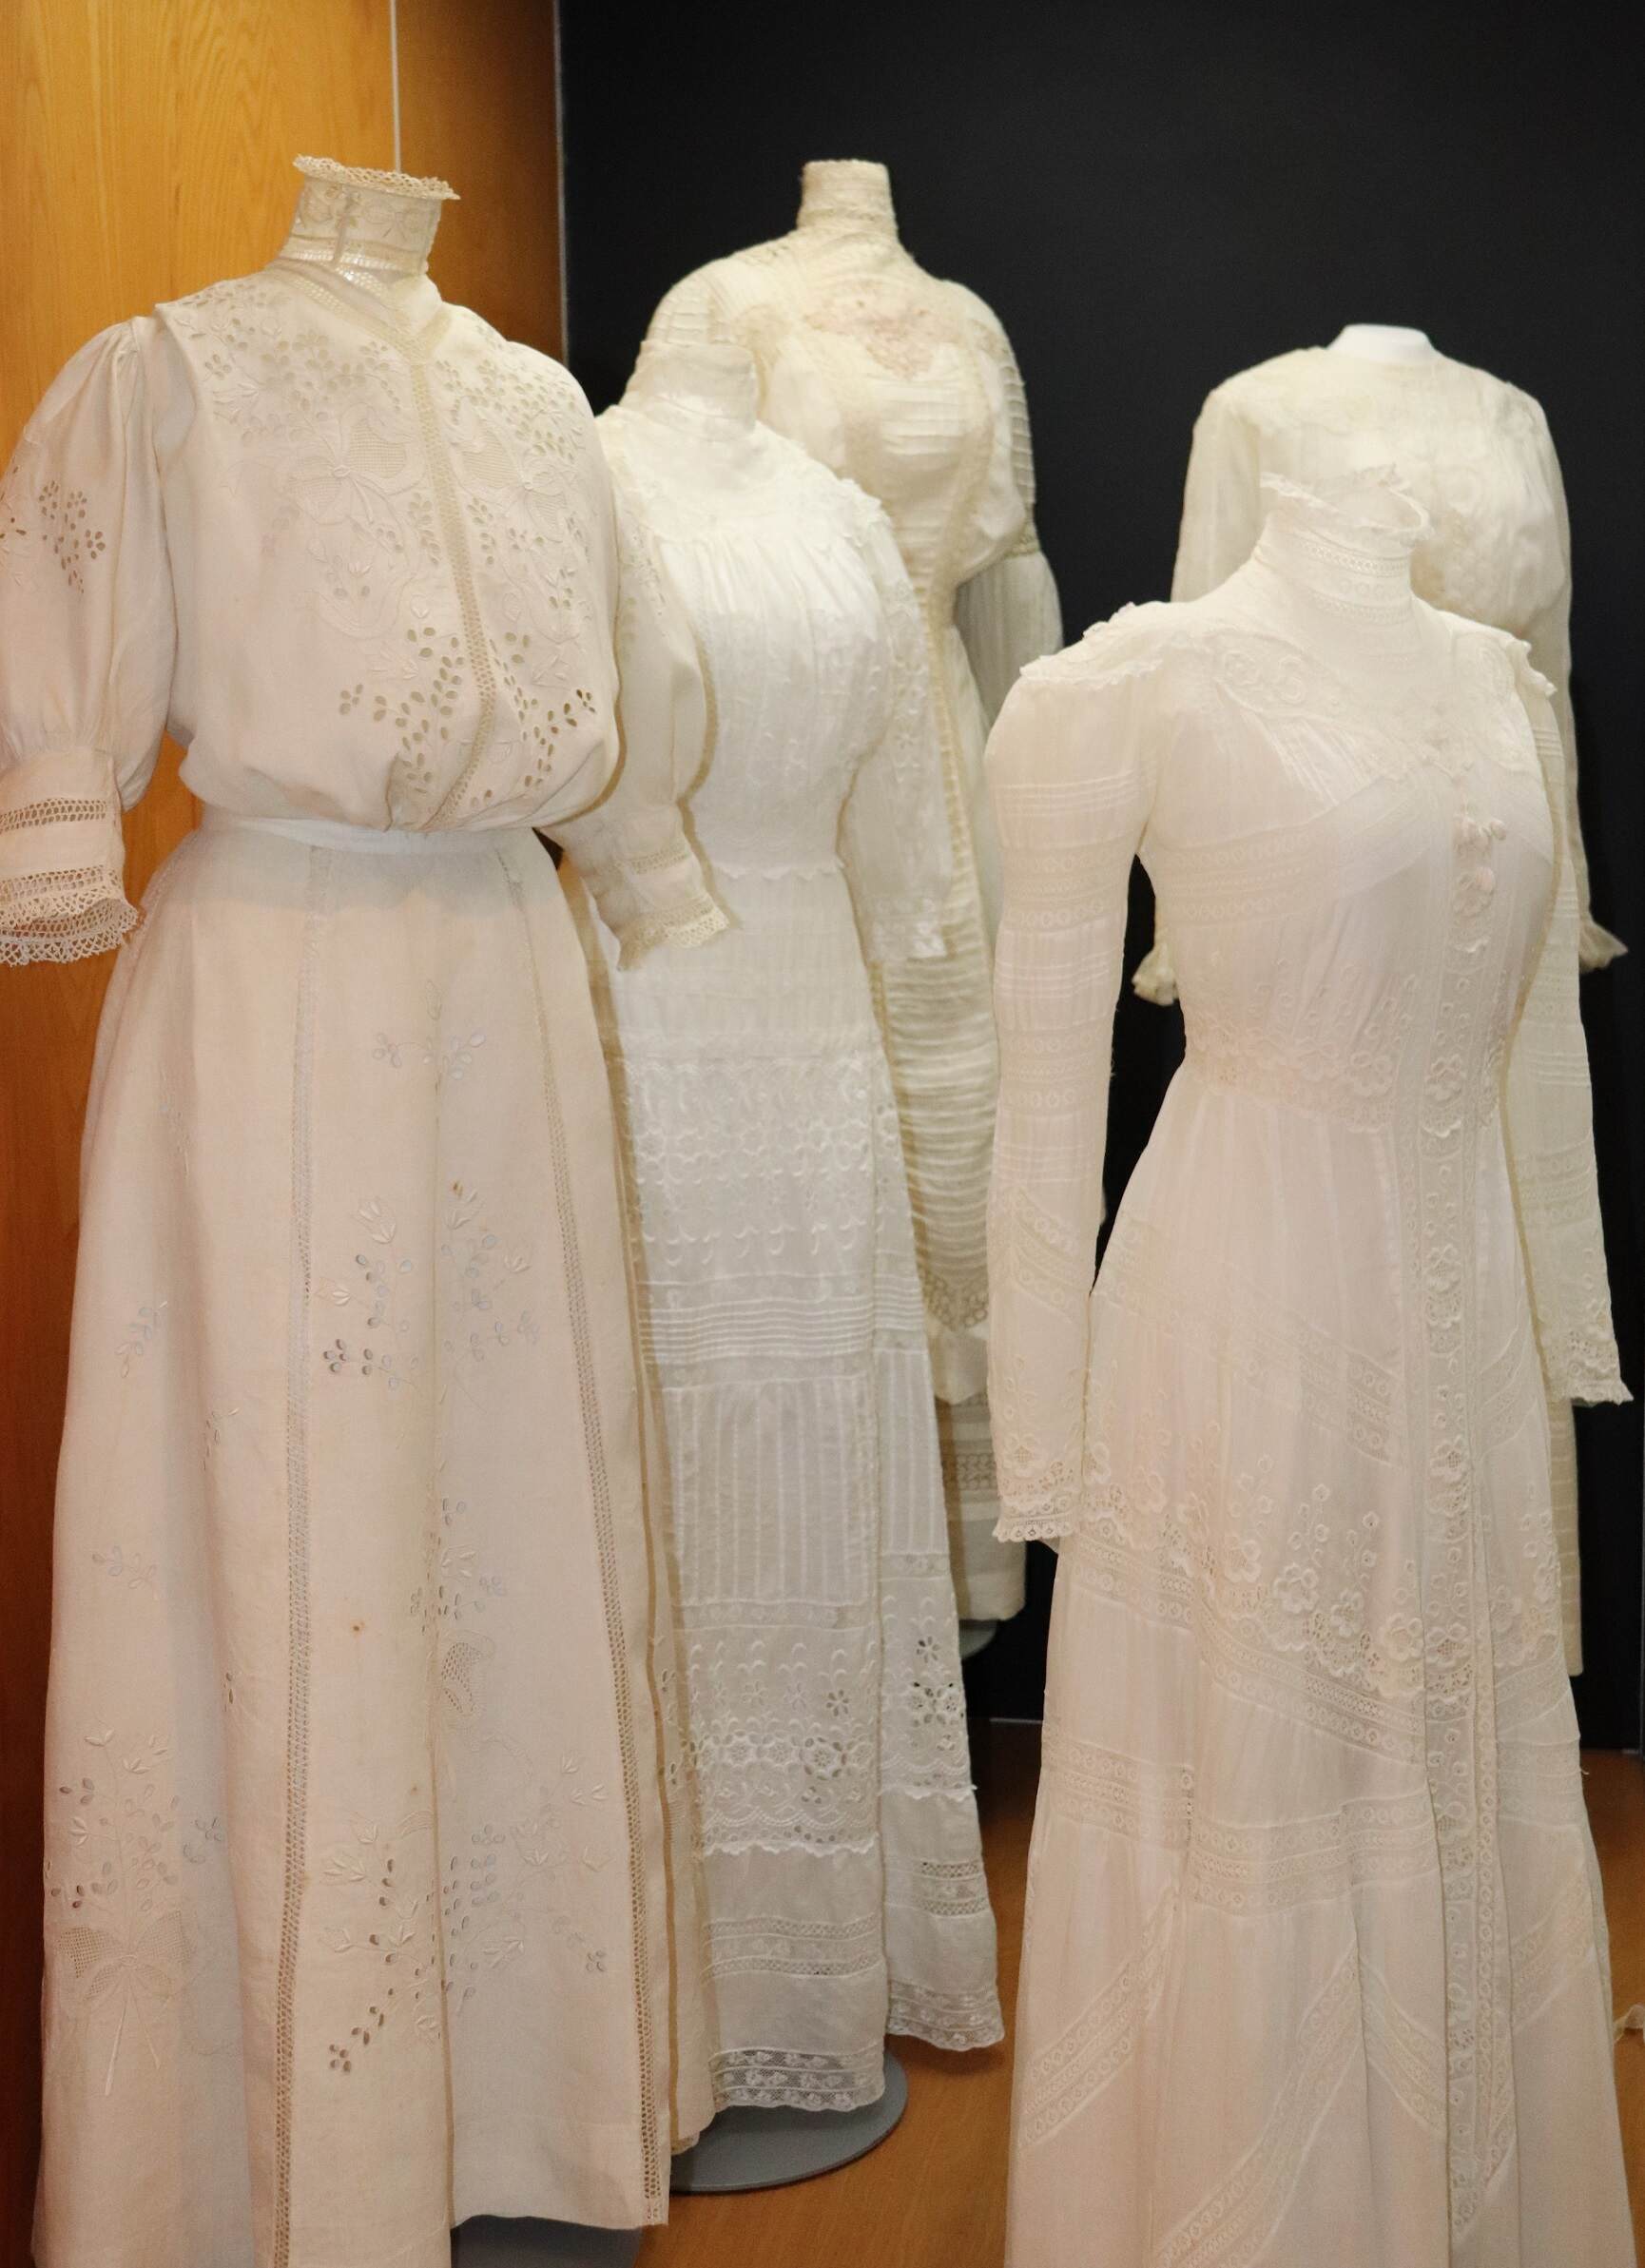 Tauranga Historical Society: Victorian Underwear